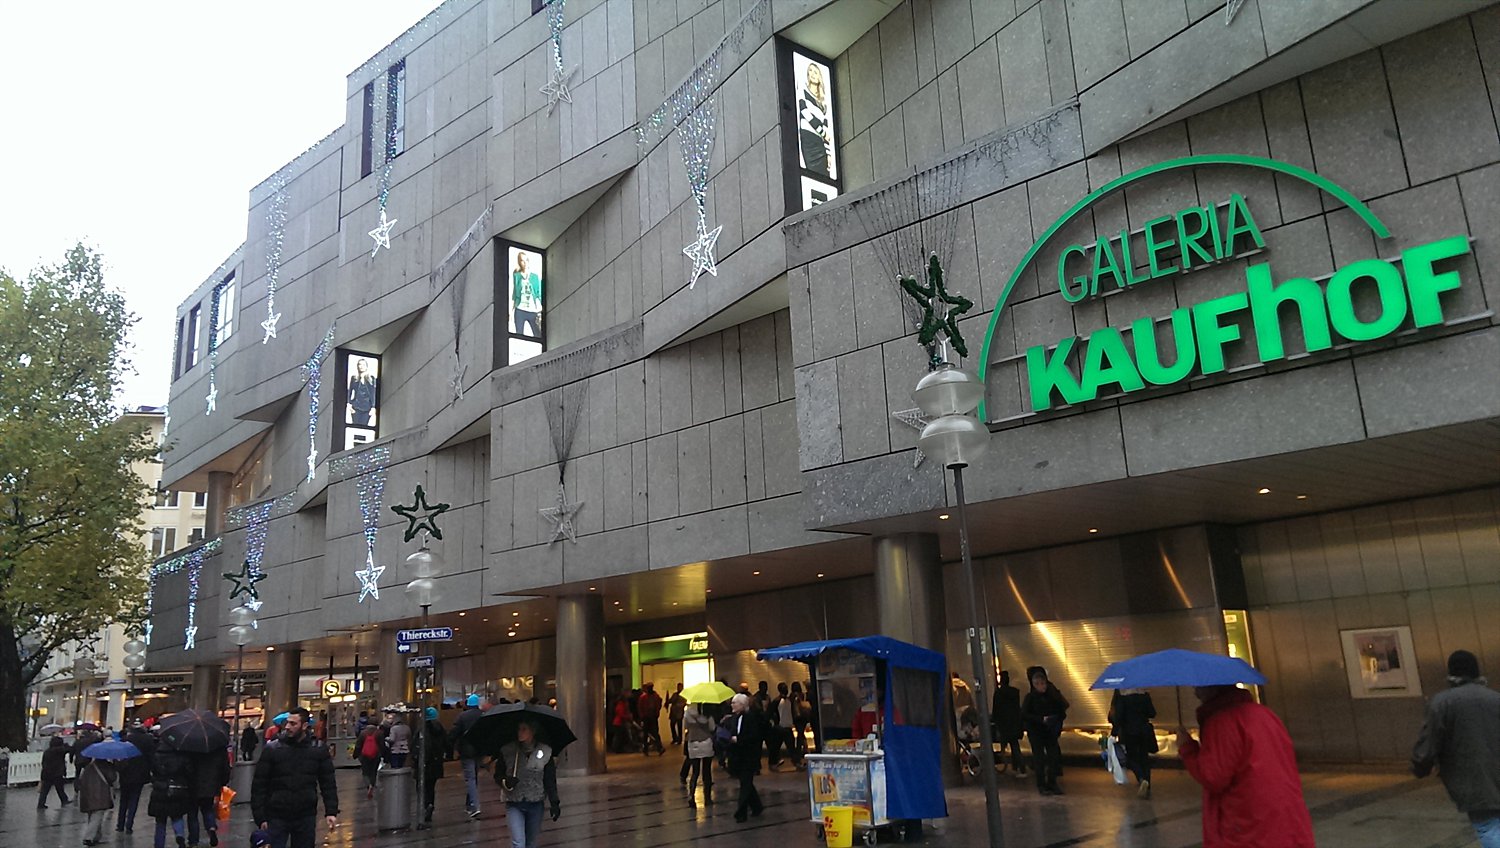 Galeria-kaufhof-marienplatz